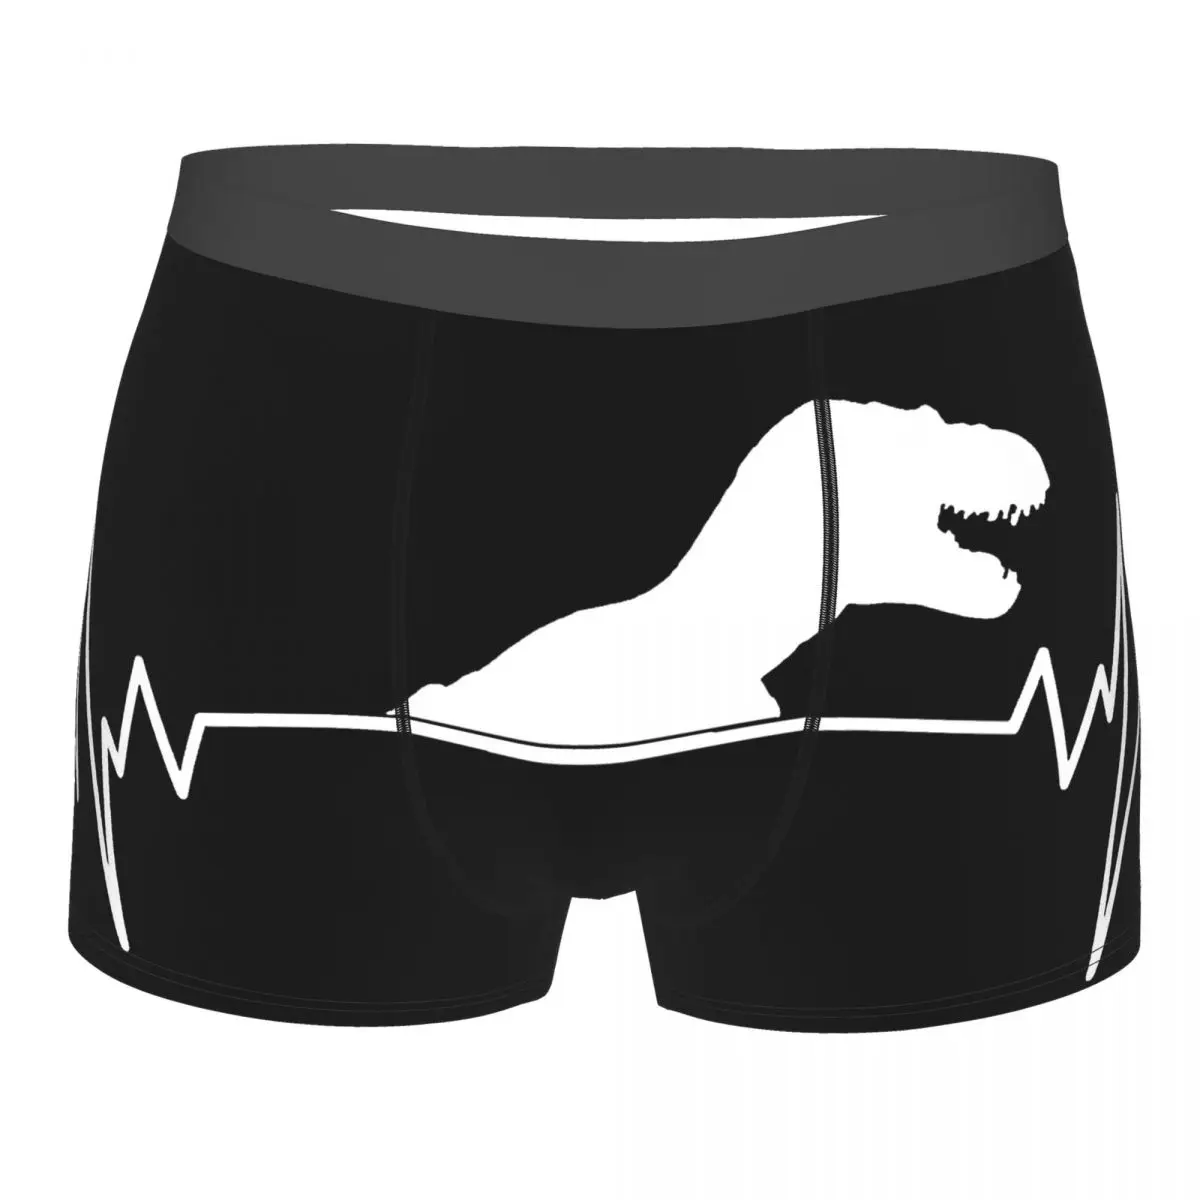 

Dinosaur T-Rex Jurassic World Science Fiction Adventure Film Underpants Homme Panties Men's Underwear Print Shorts Boxer Briefs